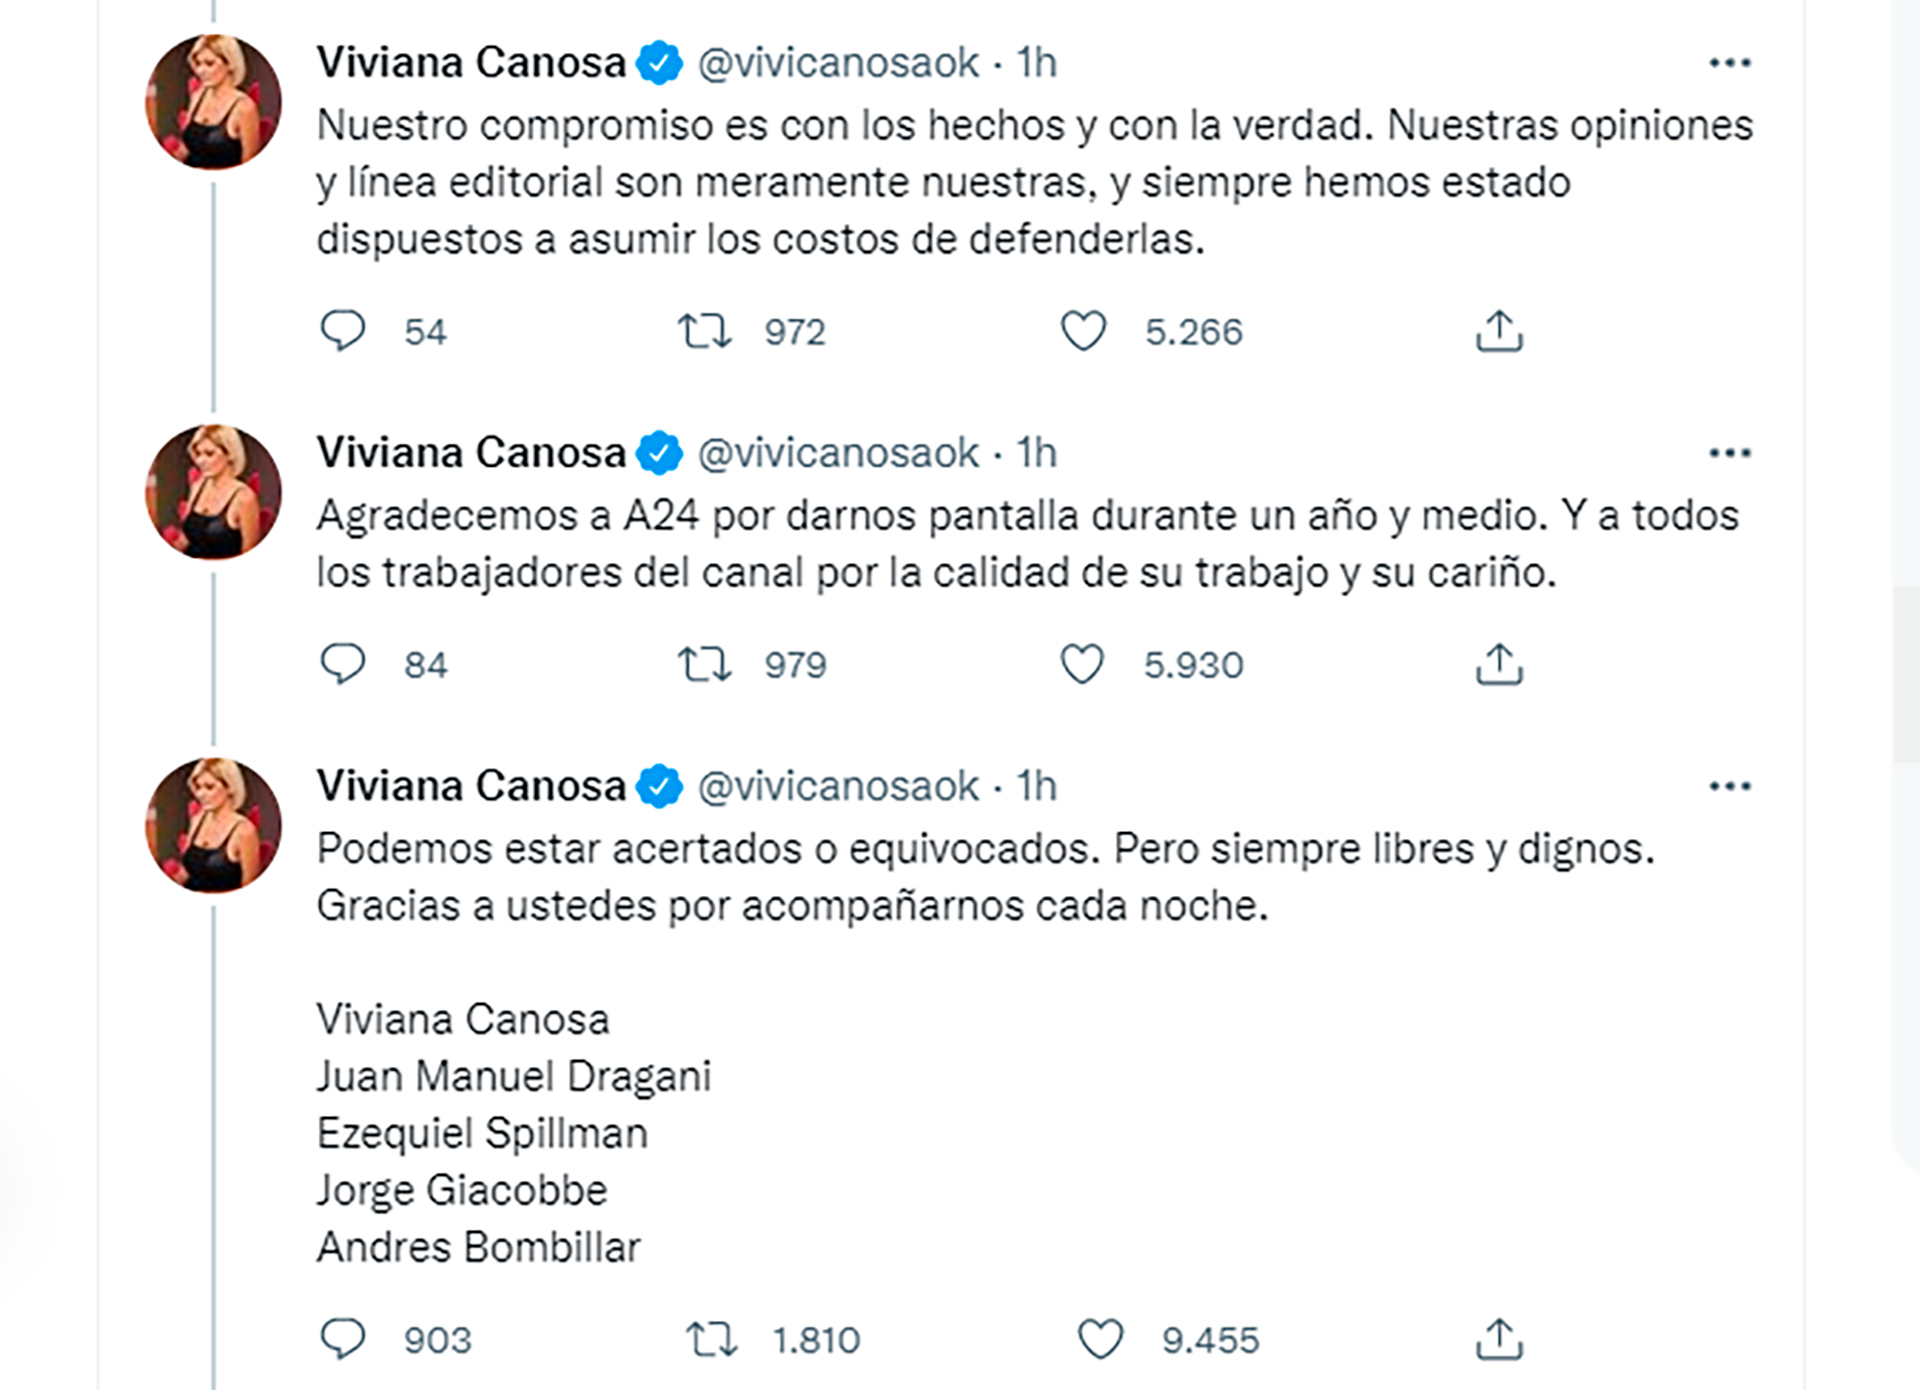 El hilo de Twitter de Viviana Canosa